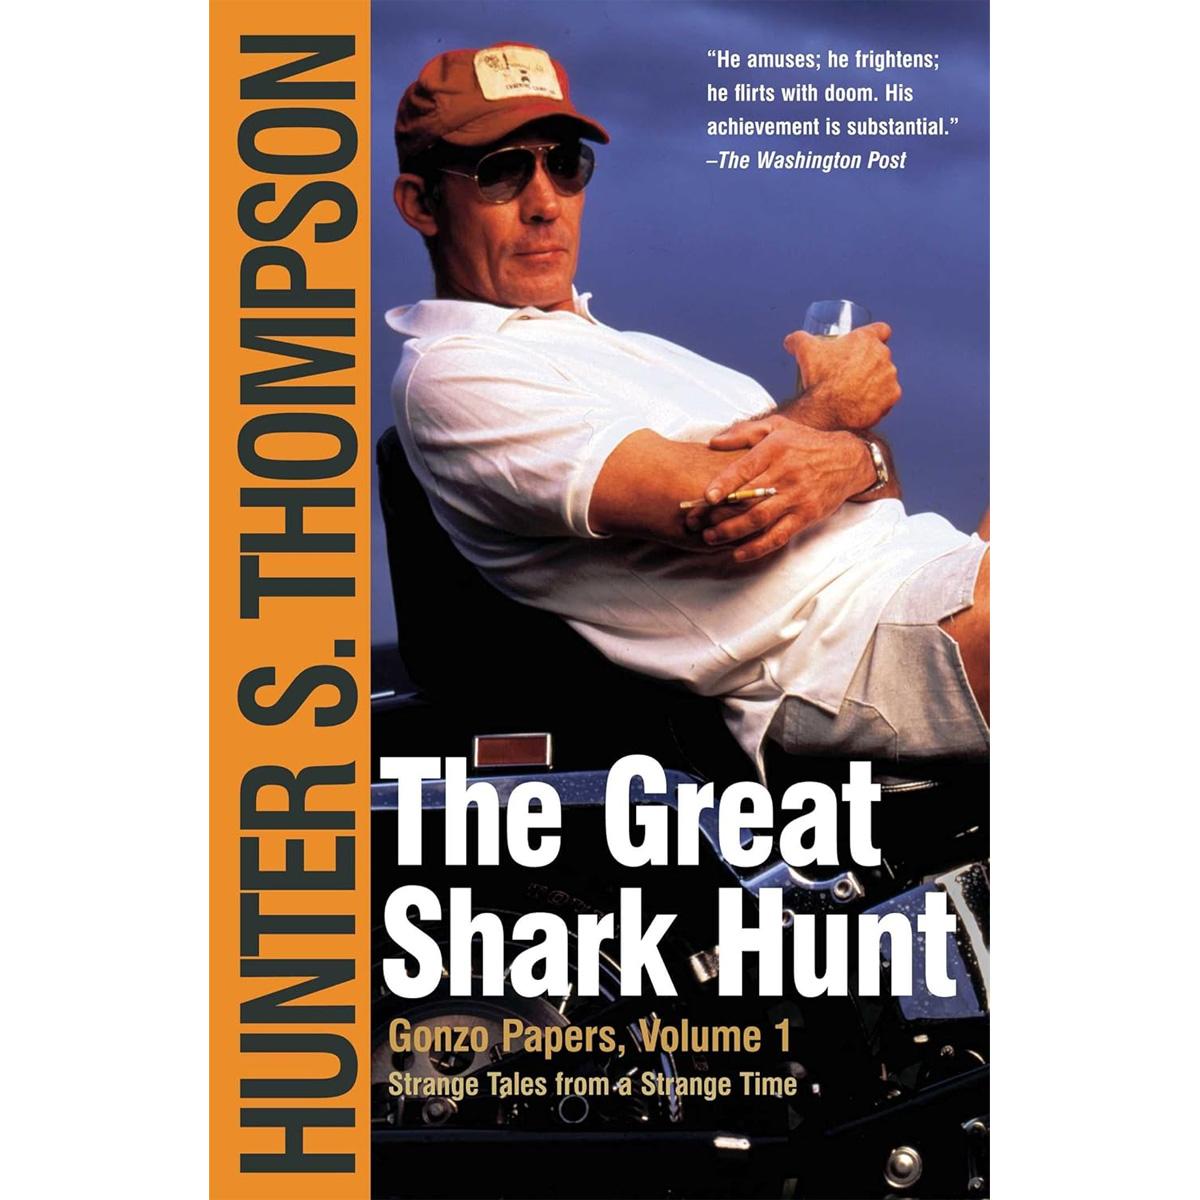 The Great Shark Hunt Strange Tales from Strange Time eBook for $0.99